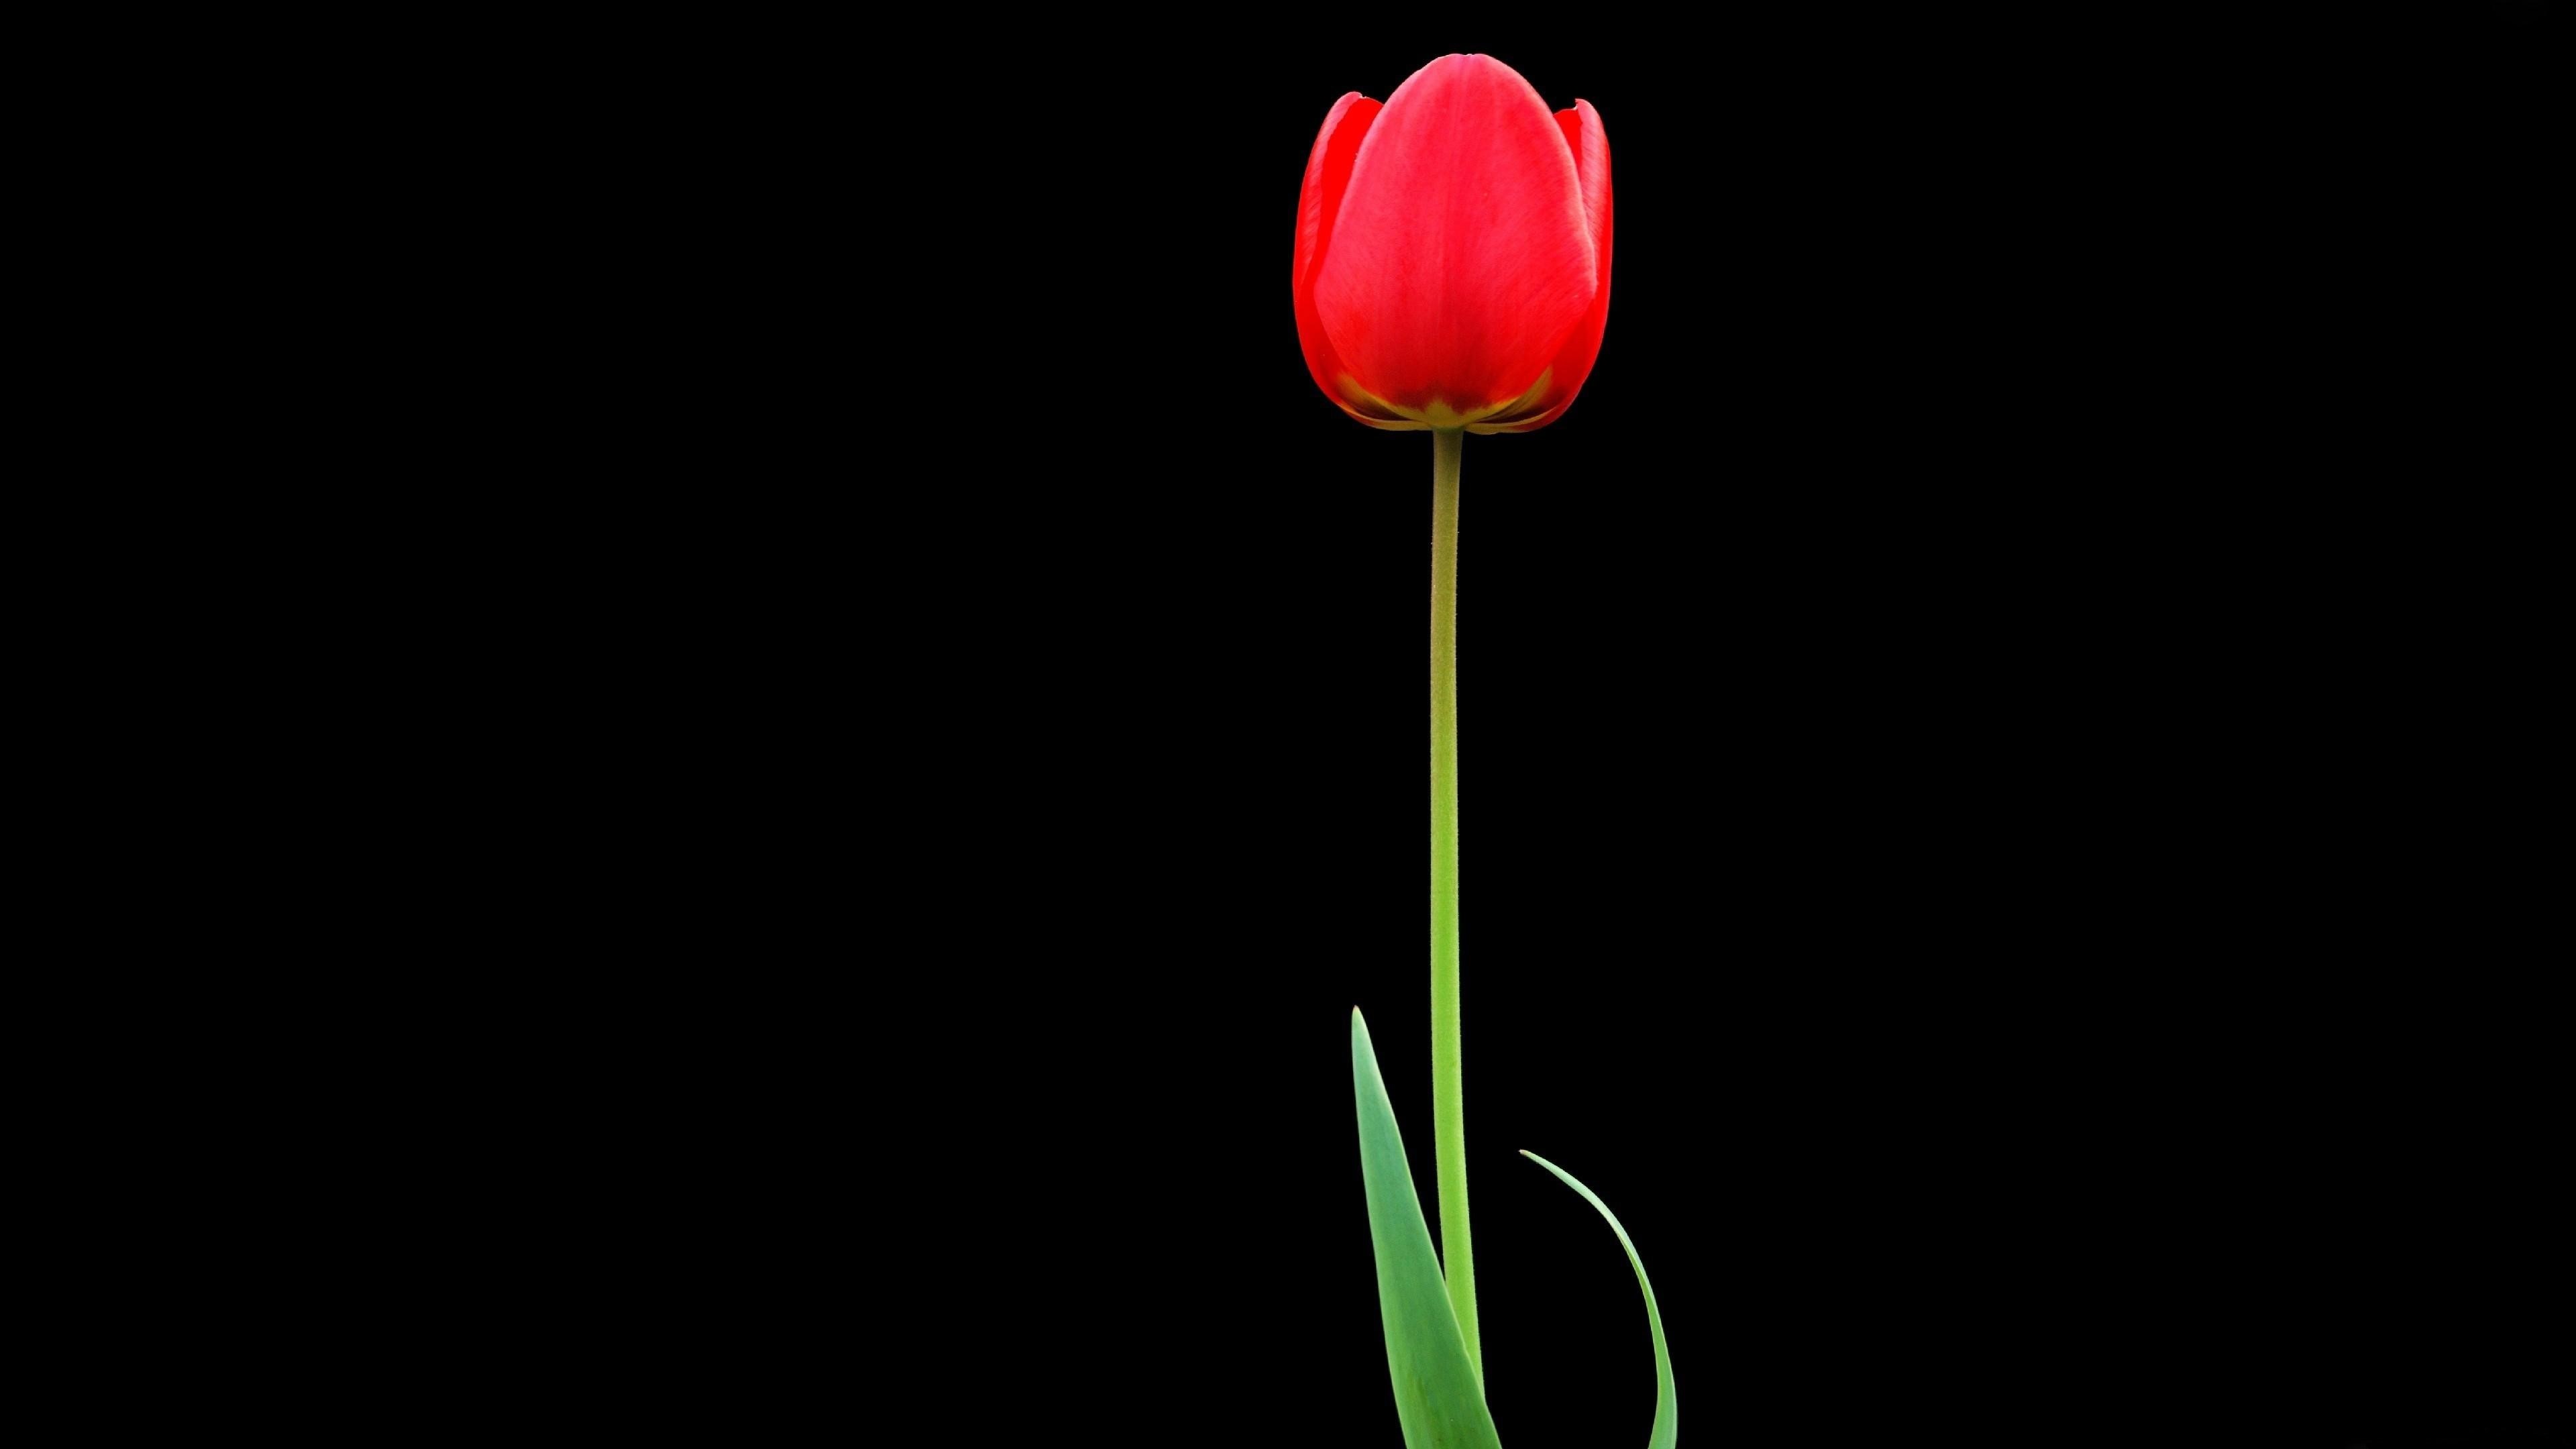 3840x2160 Tulip, Red, Flower, One, Black background wallpaper JPG